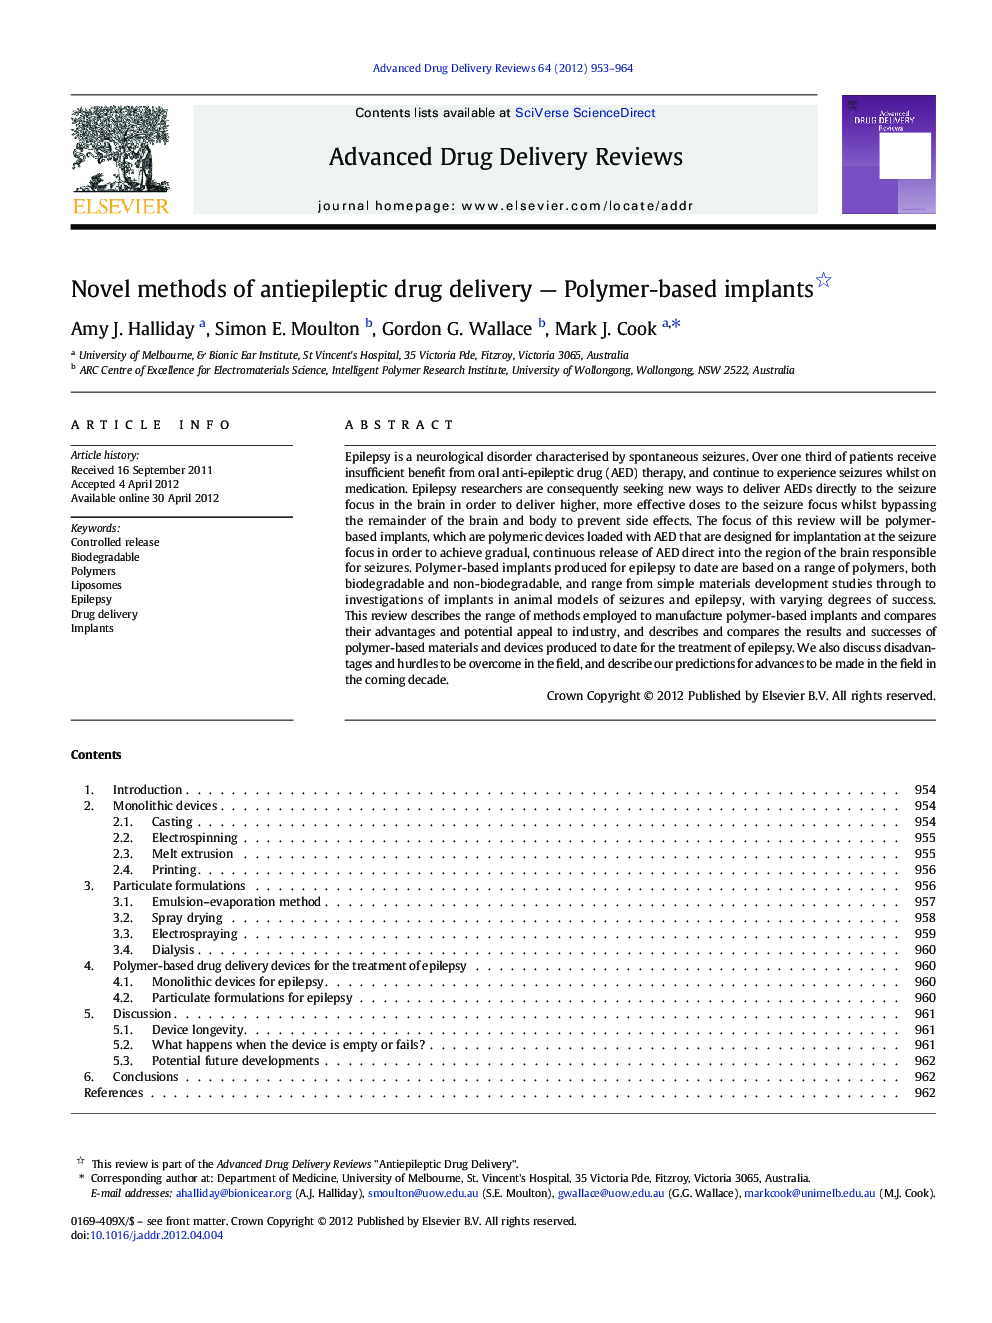 Novel methods of antiepileptic drug delivery — Polymer-based implants 